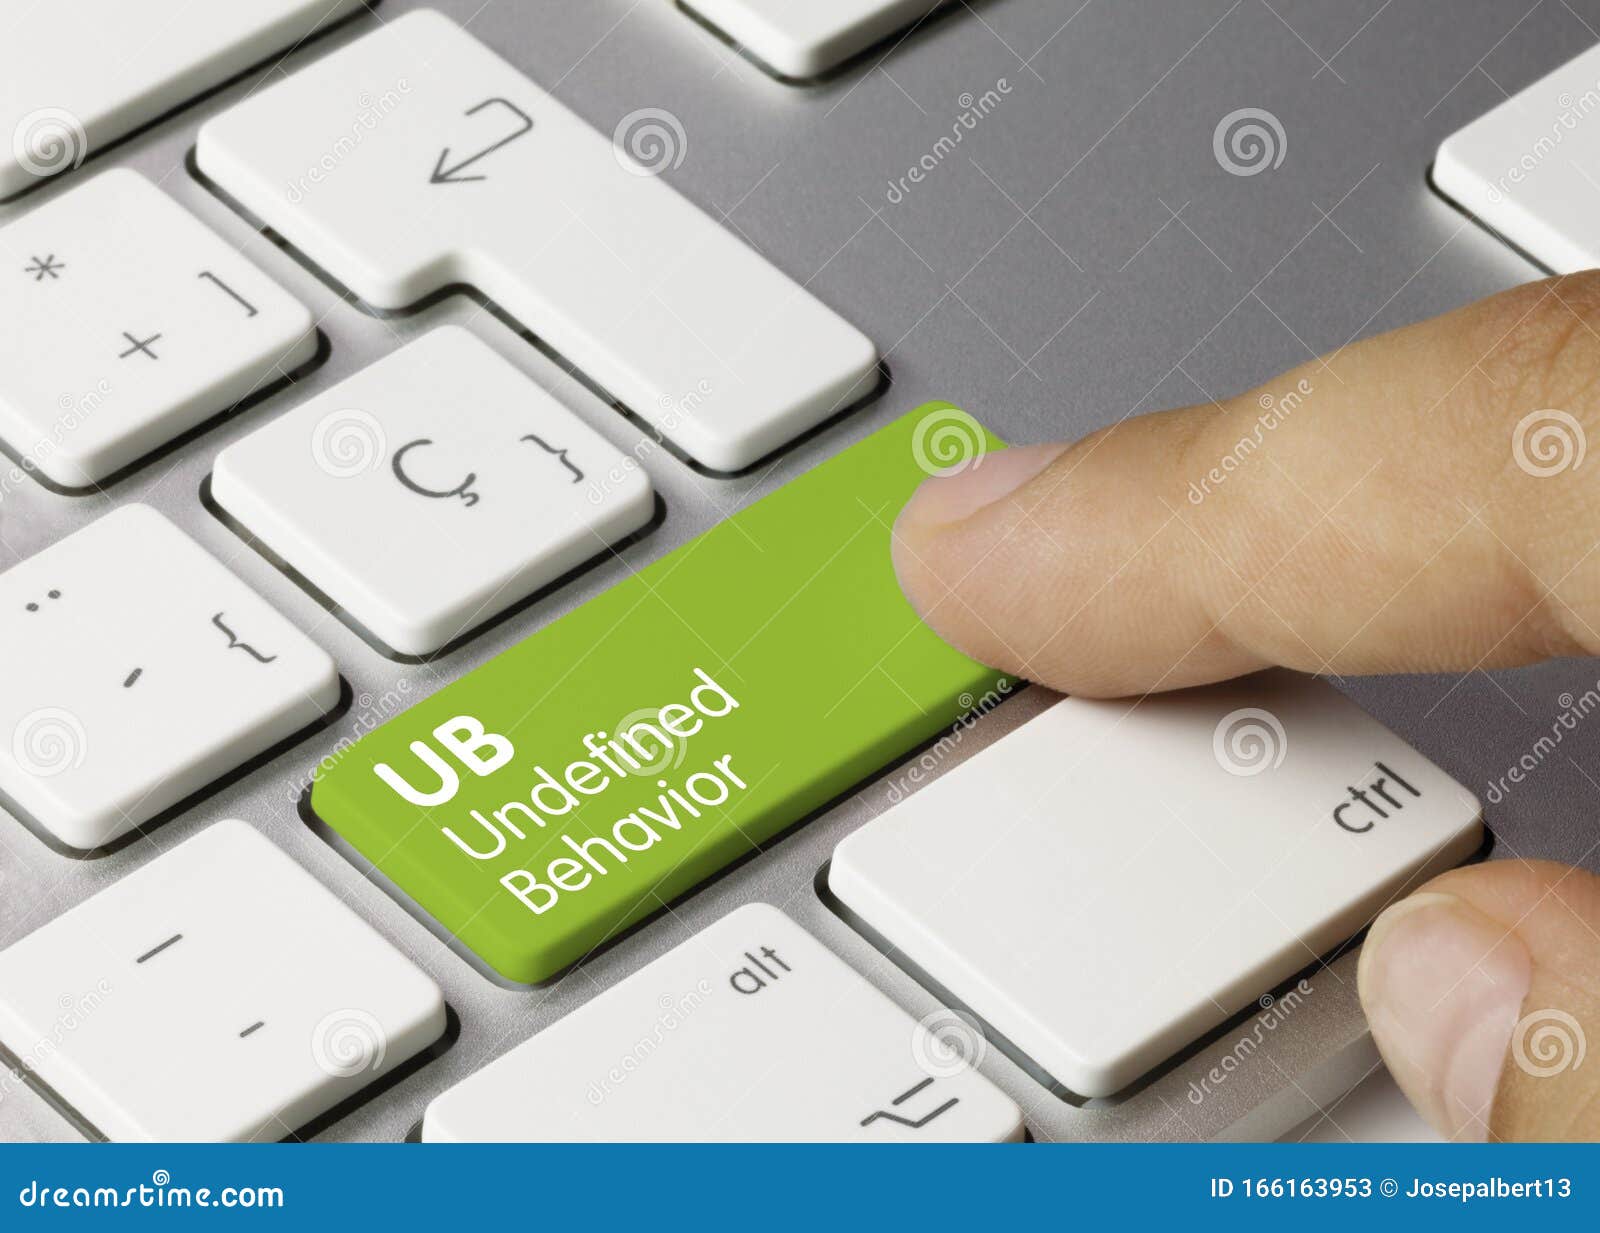 ub undefined behavior - inscription on green keyboard key